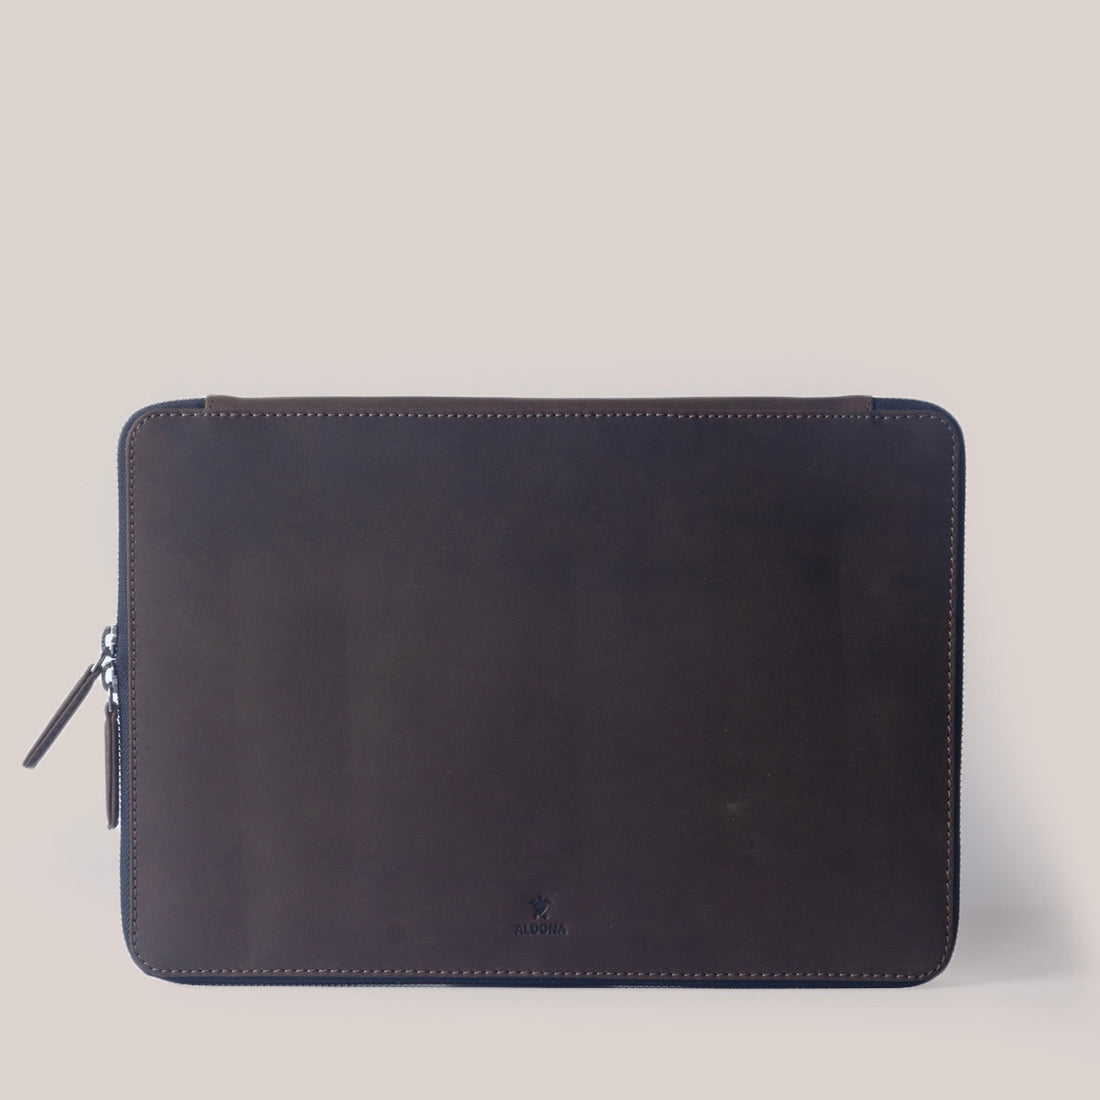 Microsoft Surface Laptop 15 Zippered Laptop Case - Onyx Black